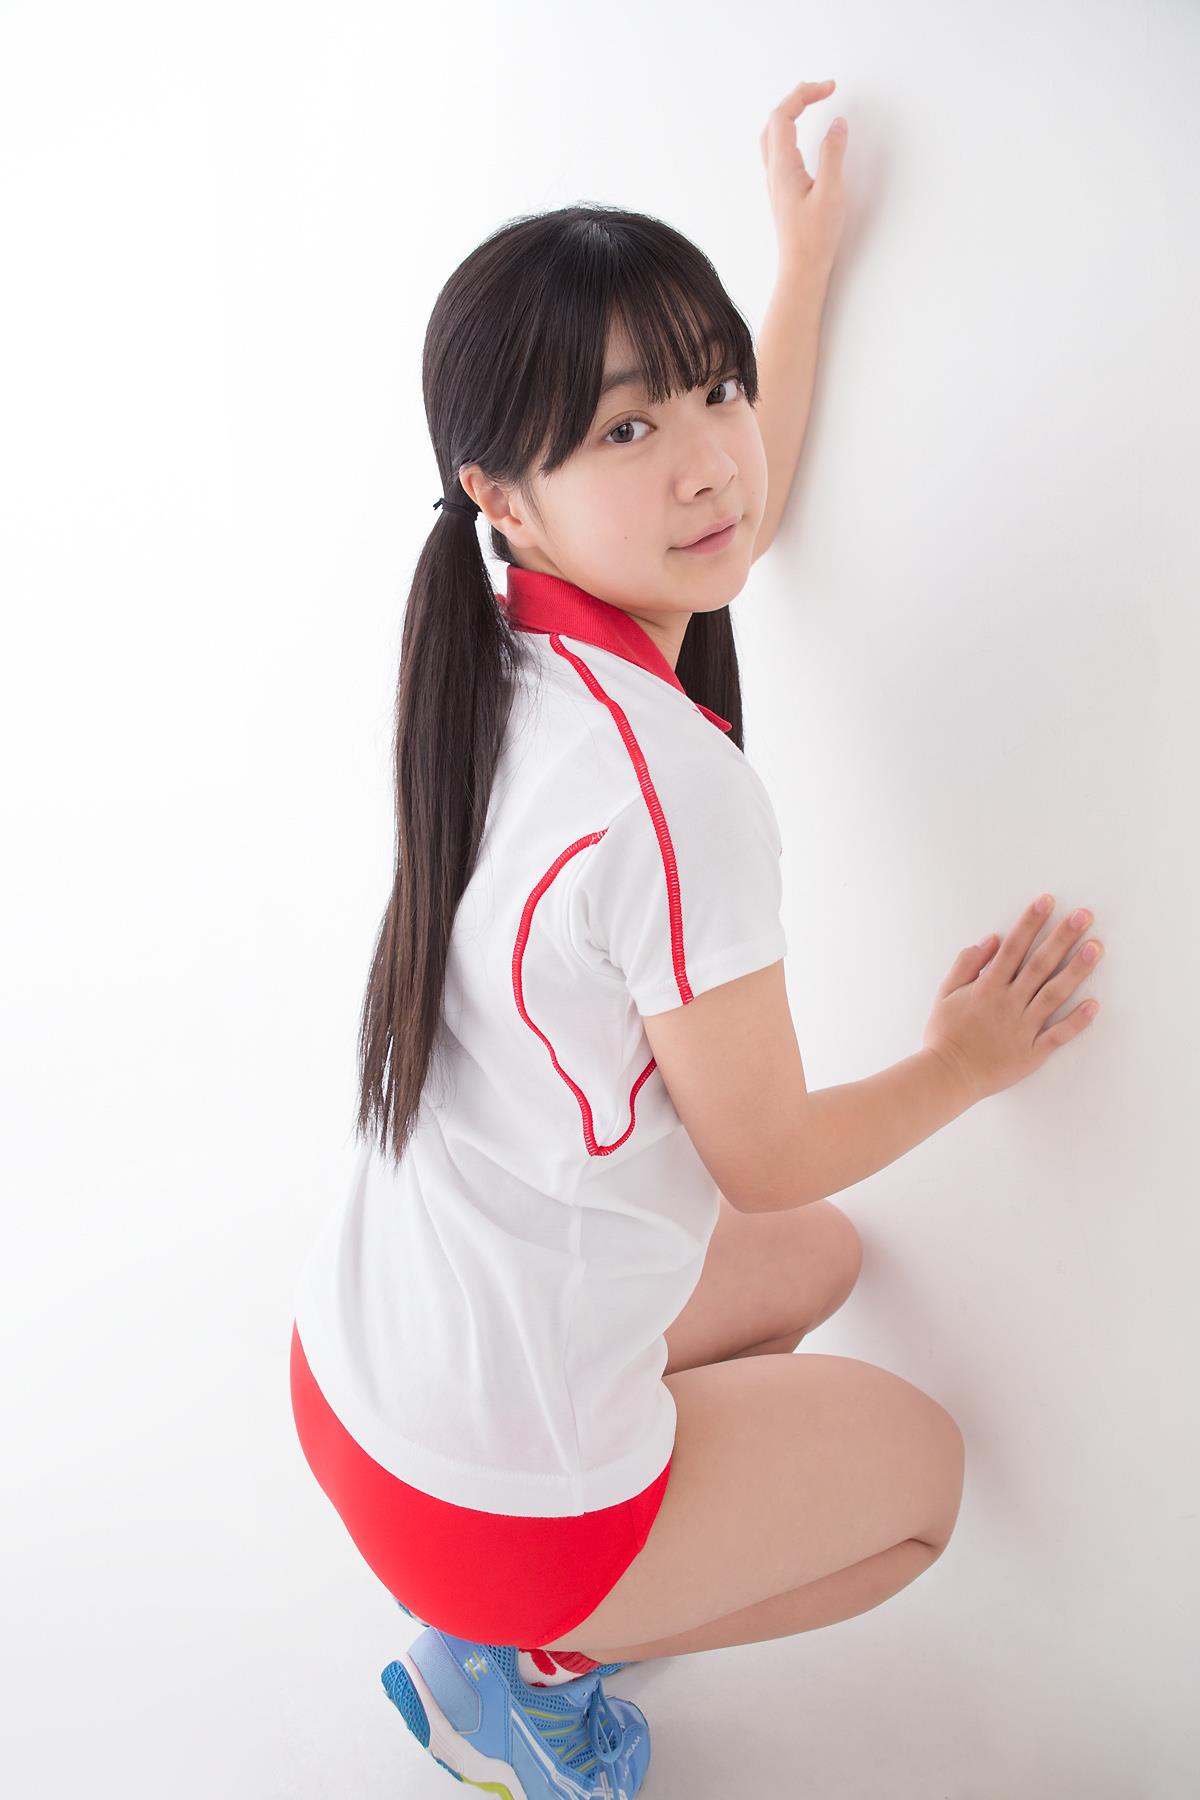 Minisuka.tv Saria Natsume 夏目咲莉愛 - Premium Gallery 2.1 - 23.jpg